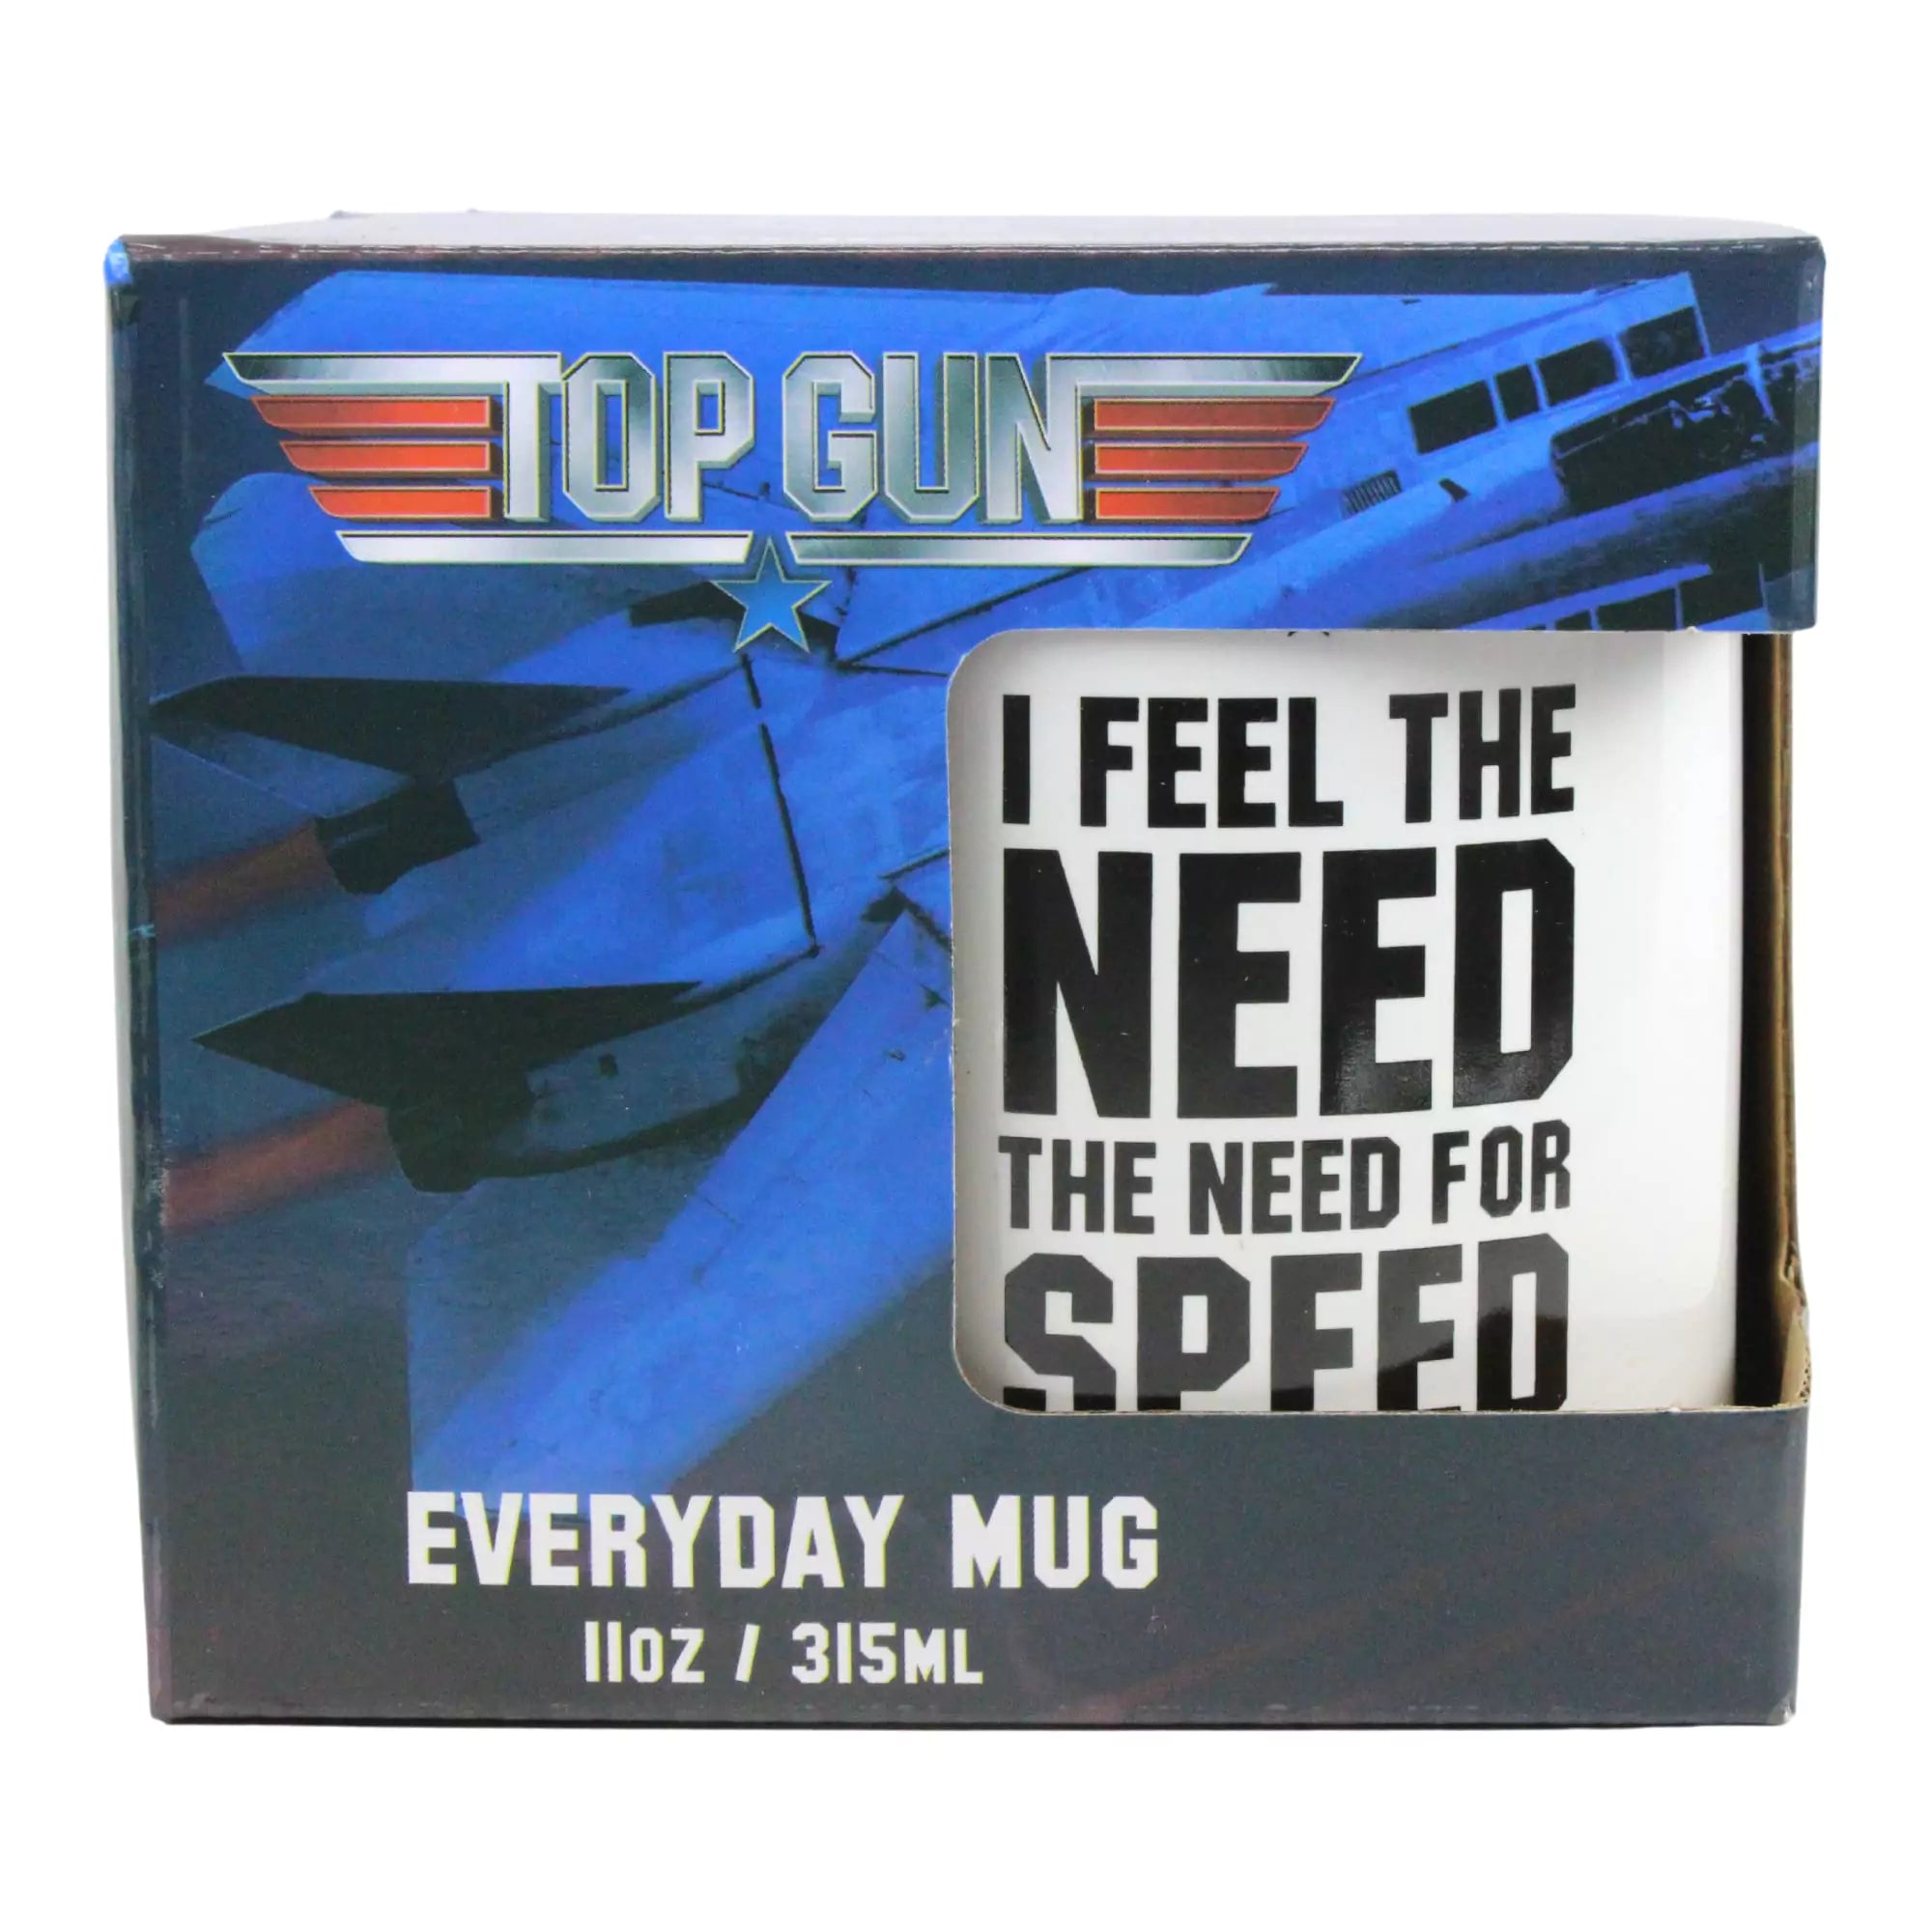 Top Gun Maverick Mug Twin Pack - 315ml Need for Speed & New Recruit - Toptoys2u